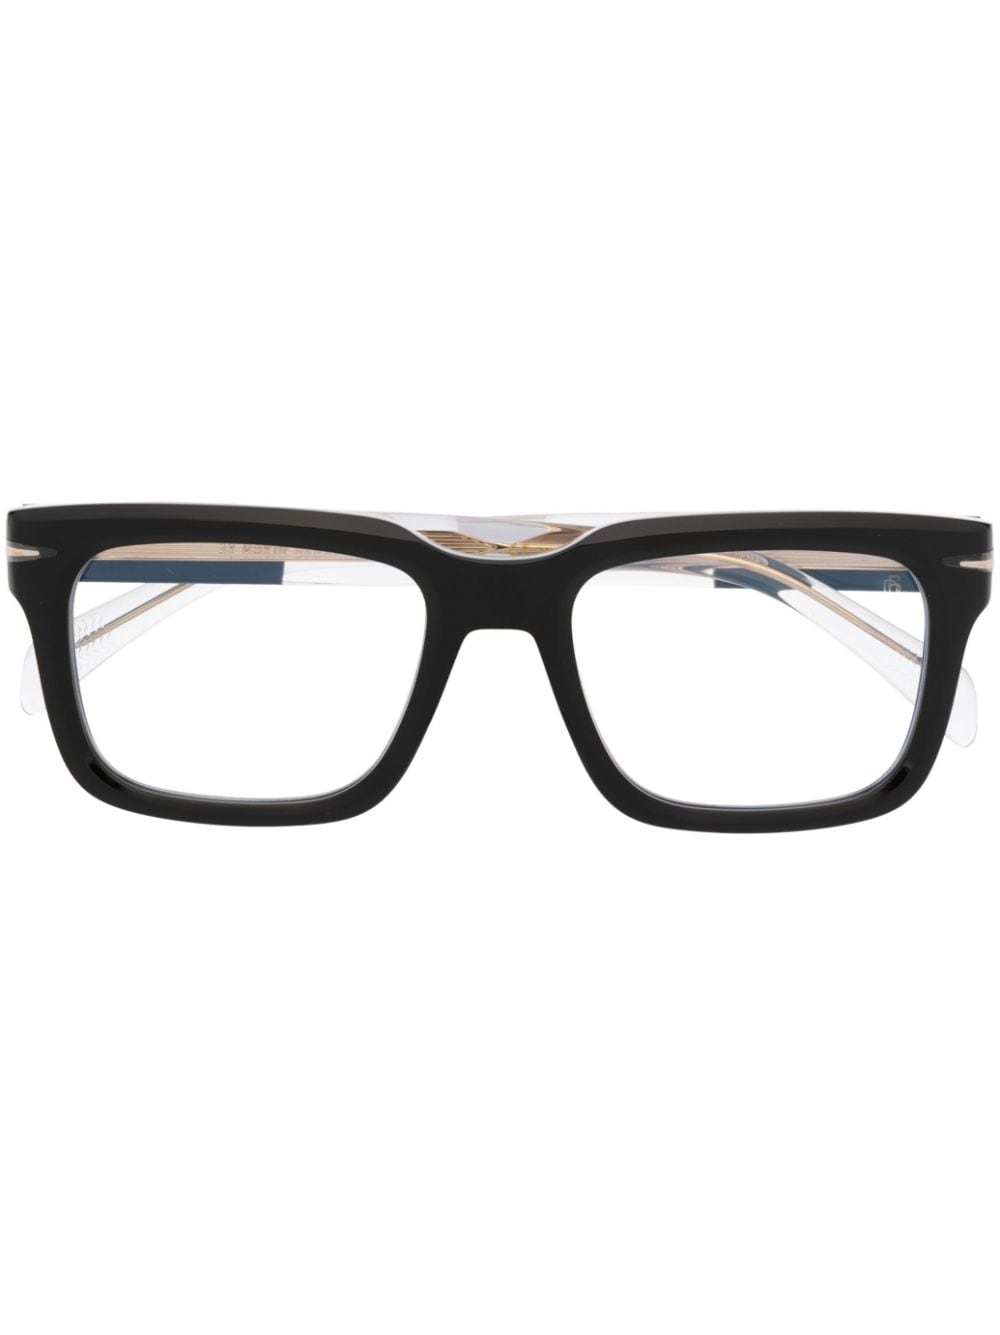 Eyewear by David Beckham square-frame glasses - Black von Eyewear by David Beckham